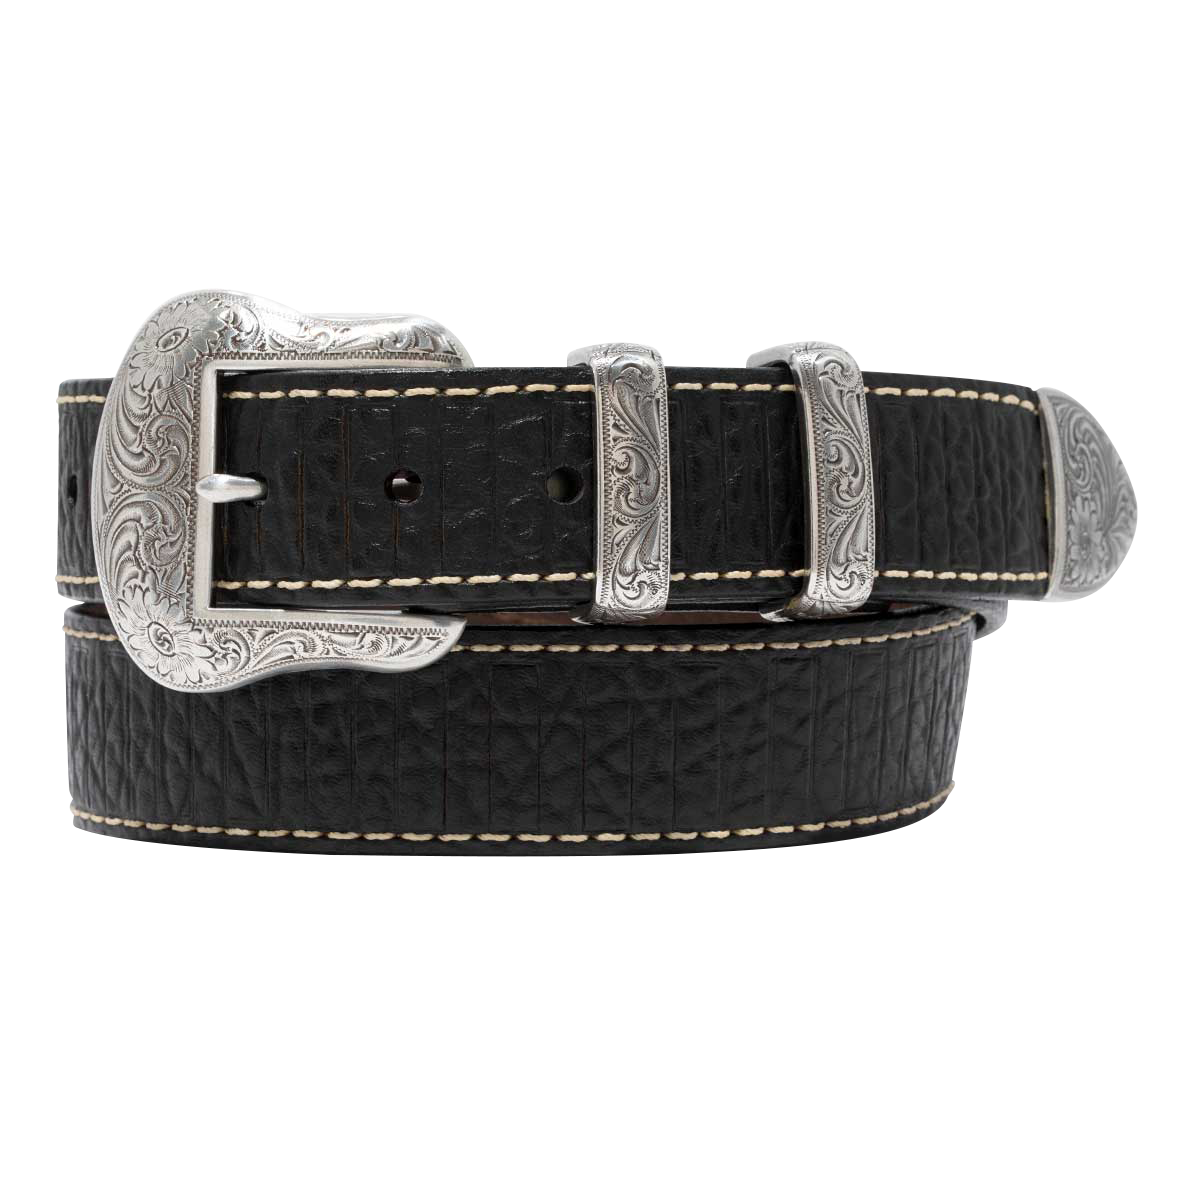 Gray Python Leather Belt 30 / 40mm / Gray